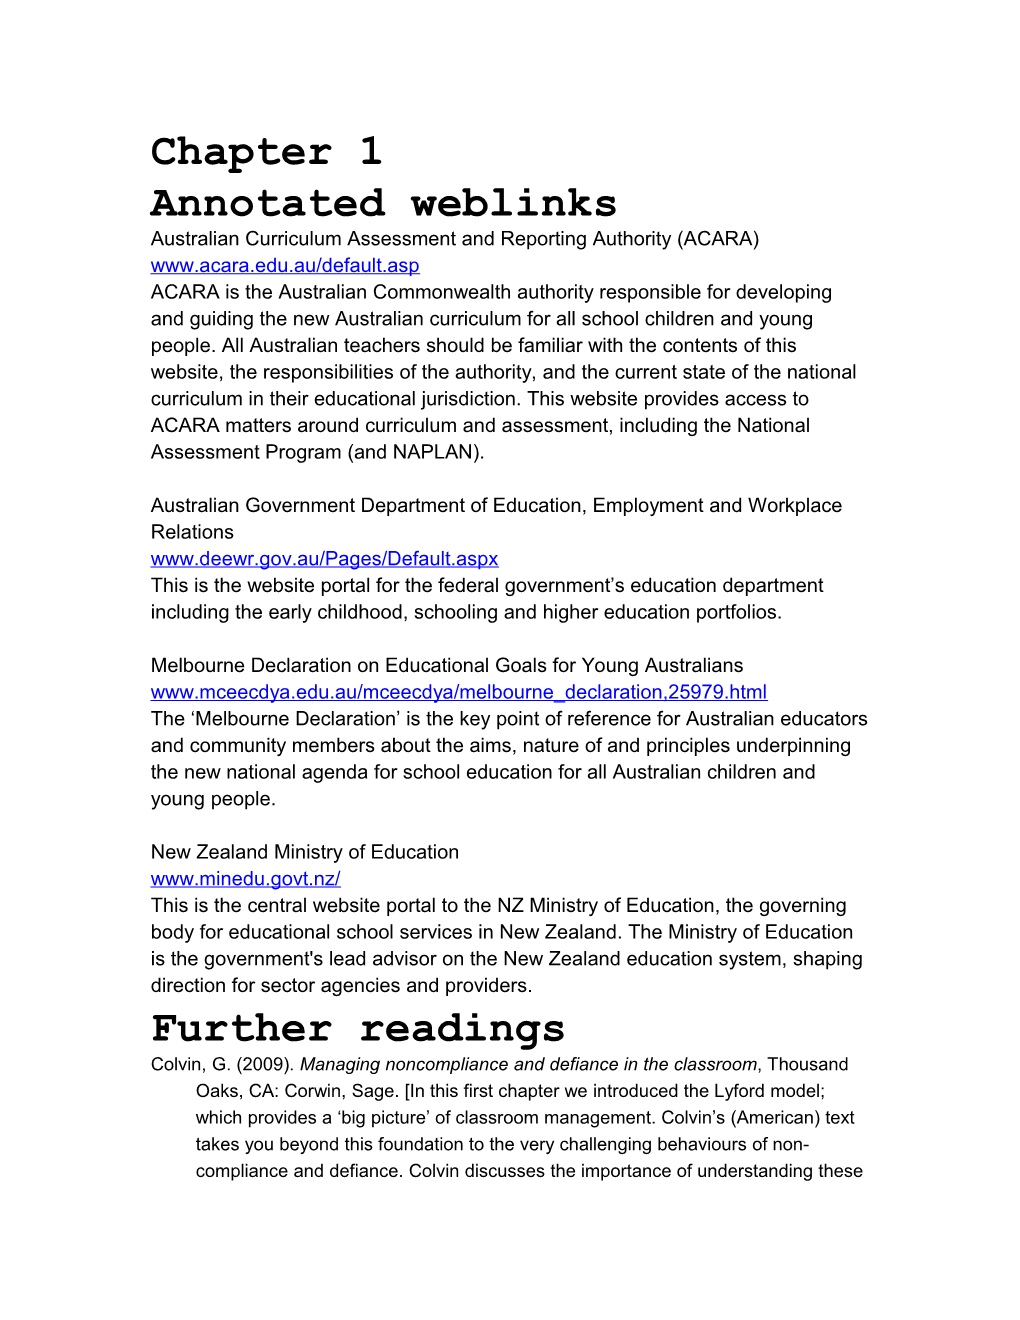 Annotated Weblinks